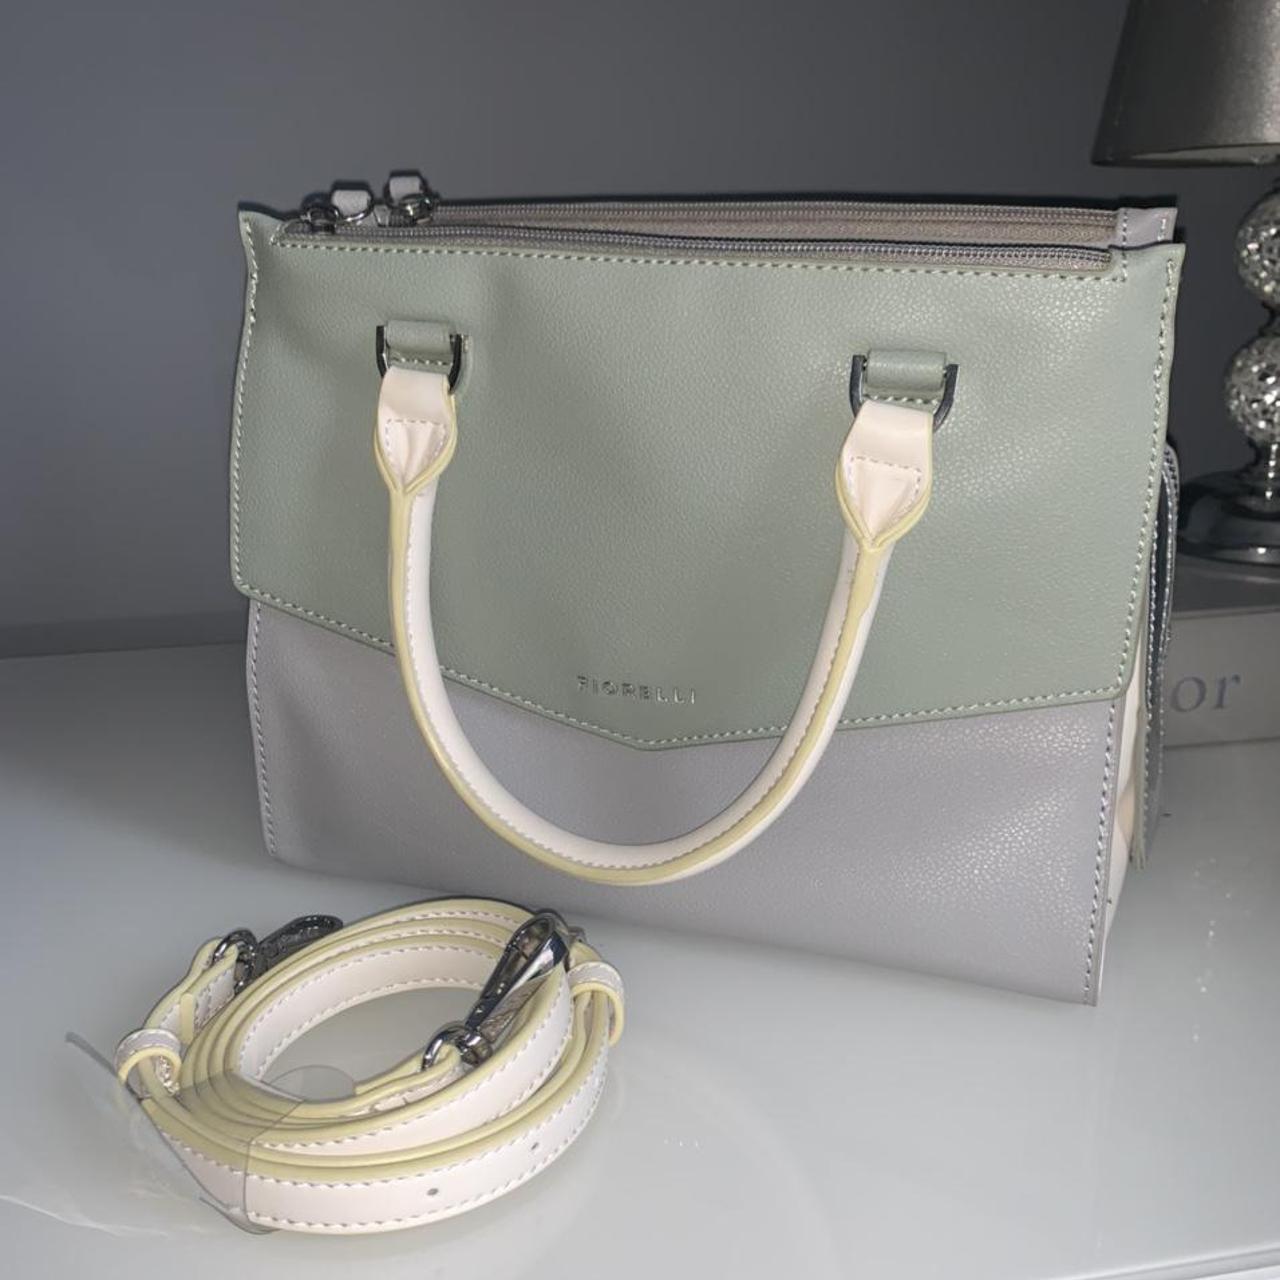 Product Image 1 - Fiorelli handbag.

Good condition, one small